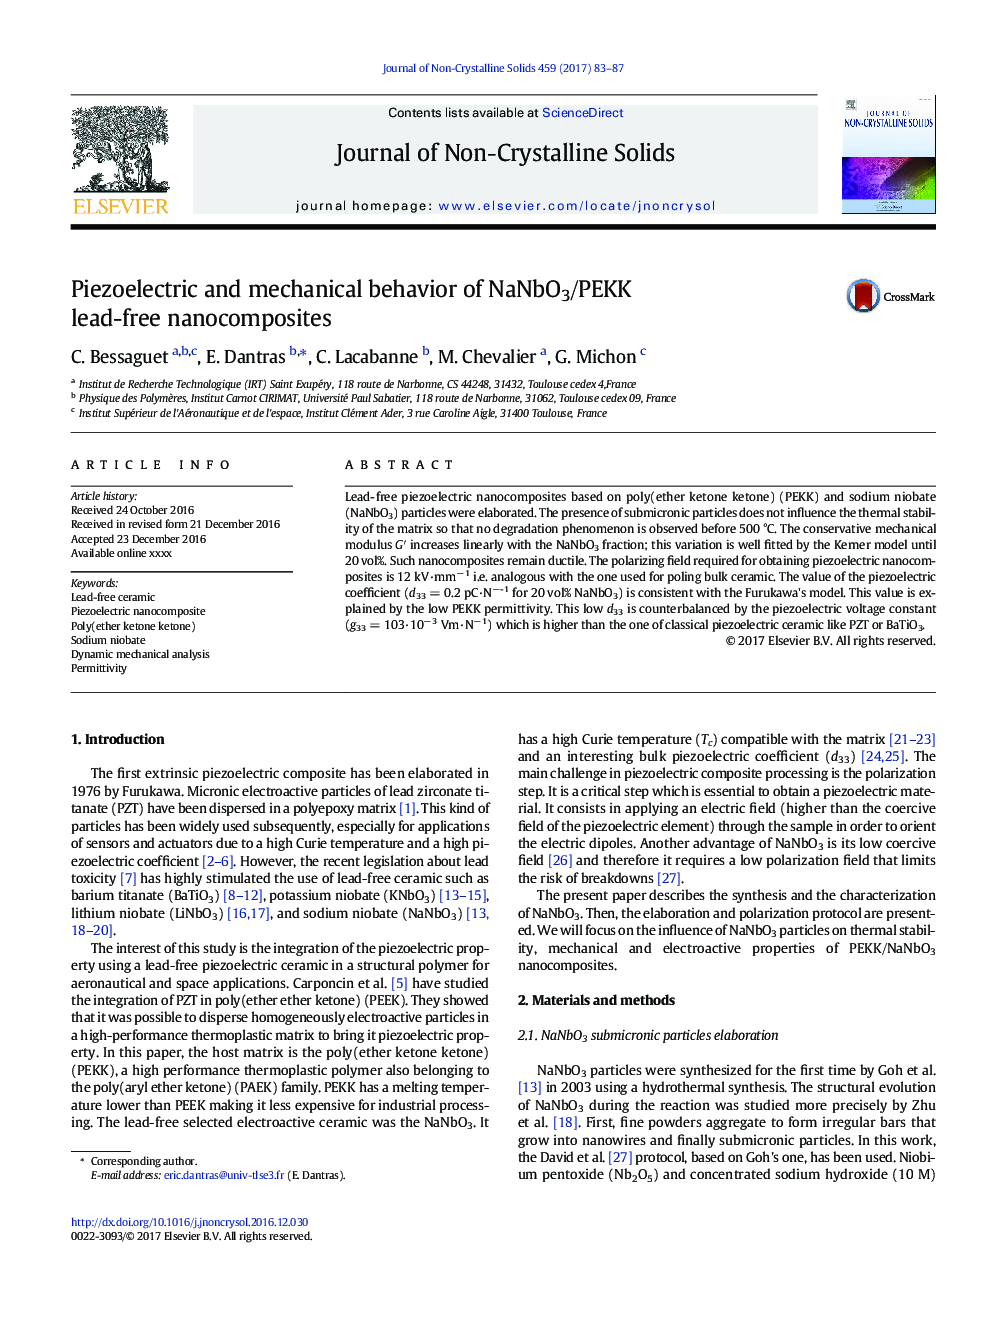 Piezoelectric and mechanical behavior of NaNbO3/PEKK lead-free nanocomposites